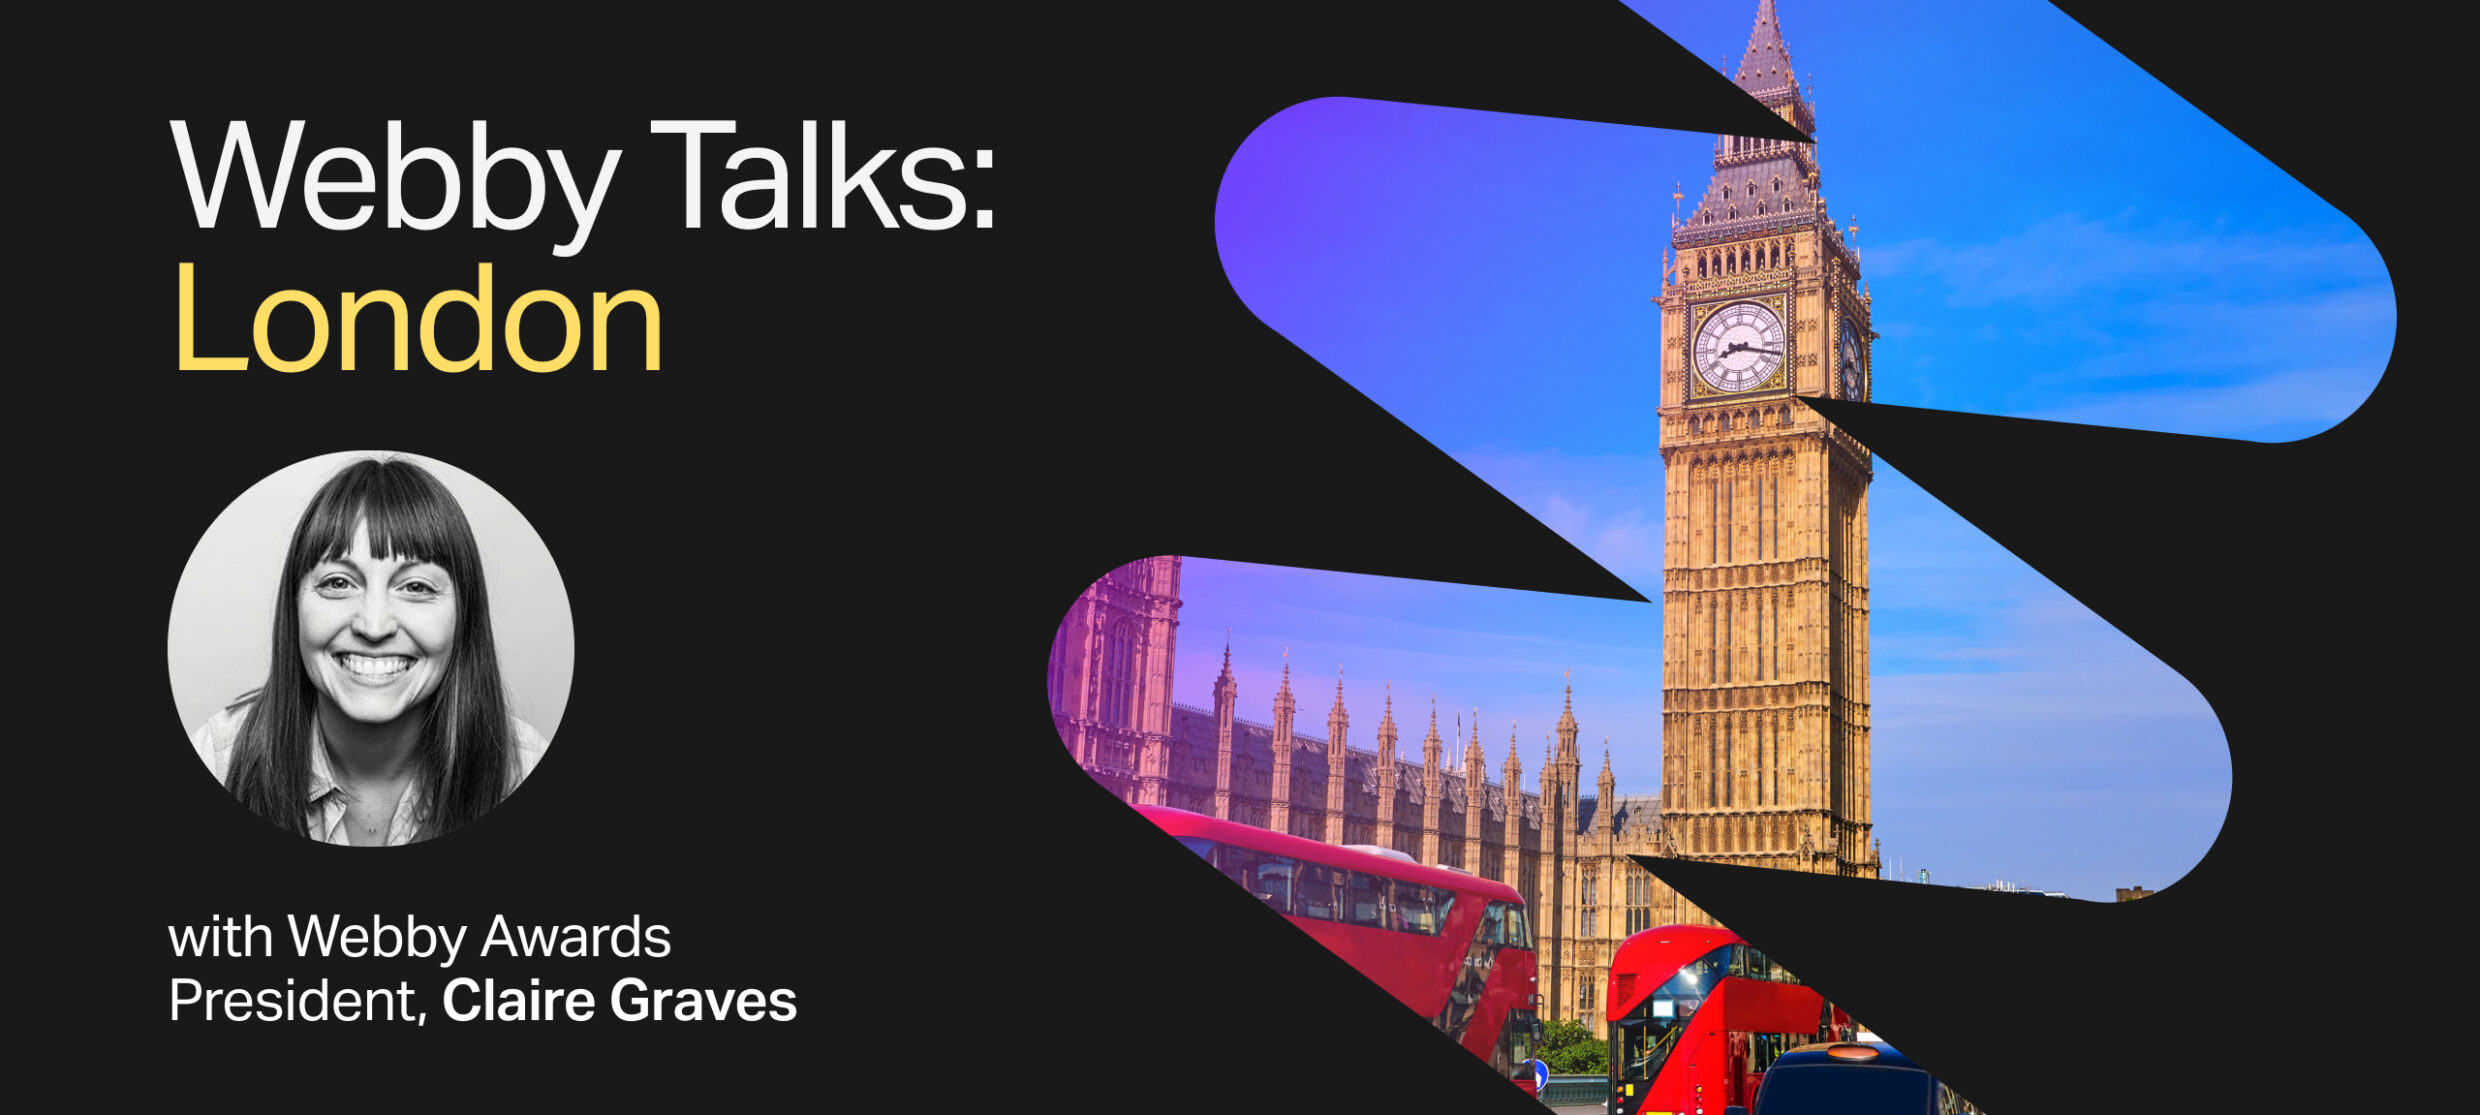 London: Webby Talk Community Event  